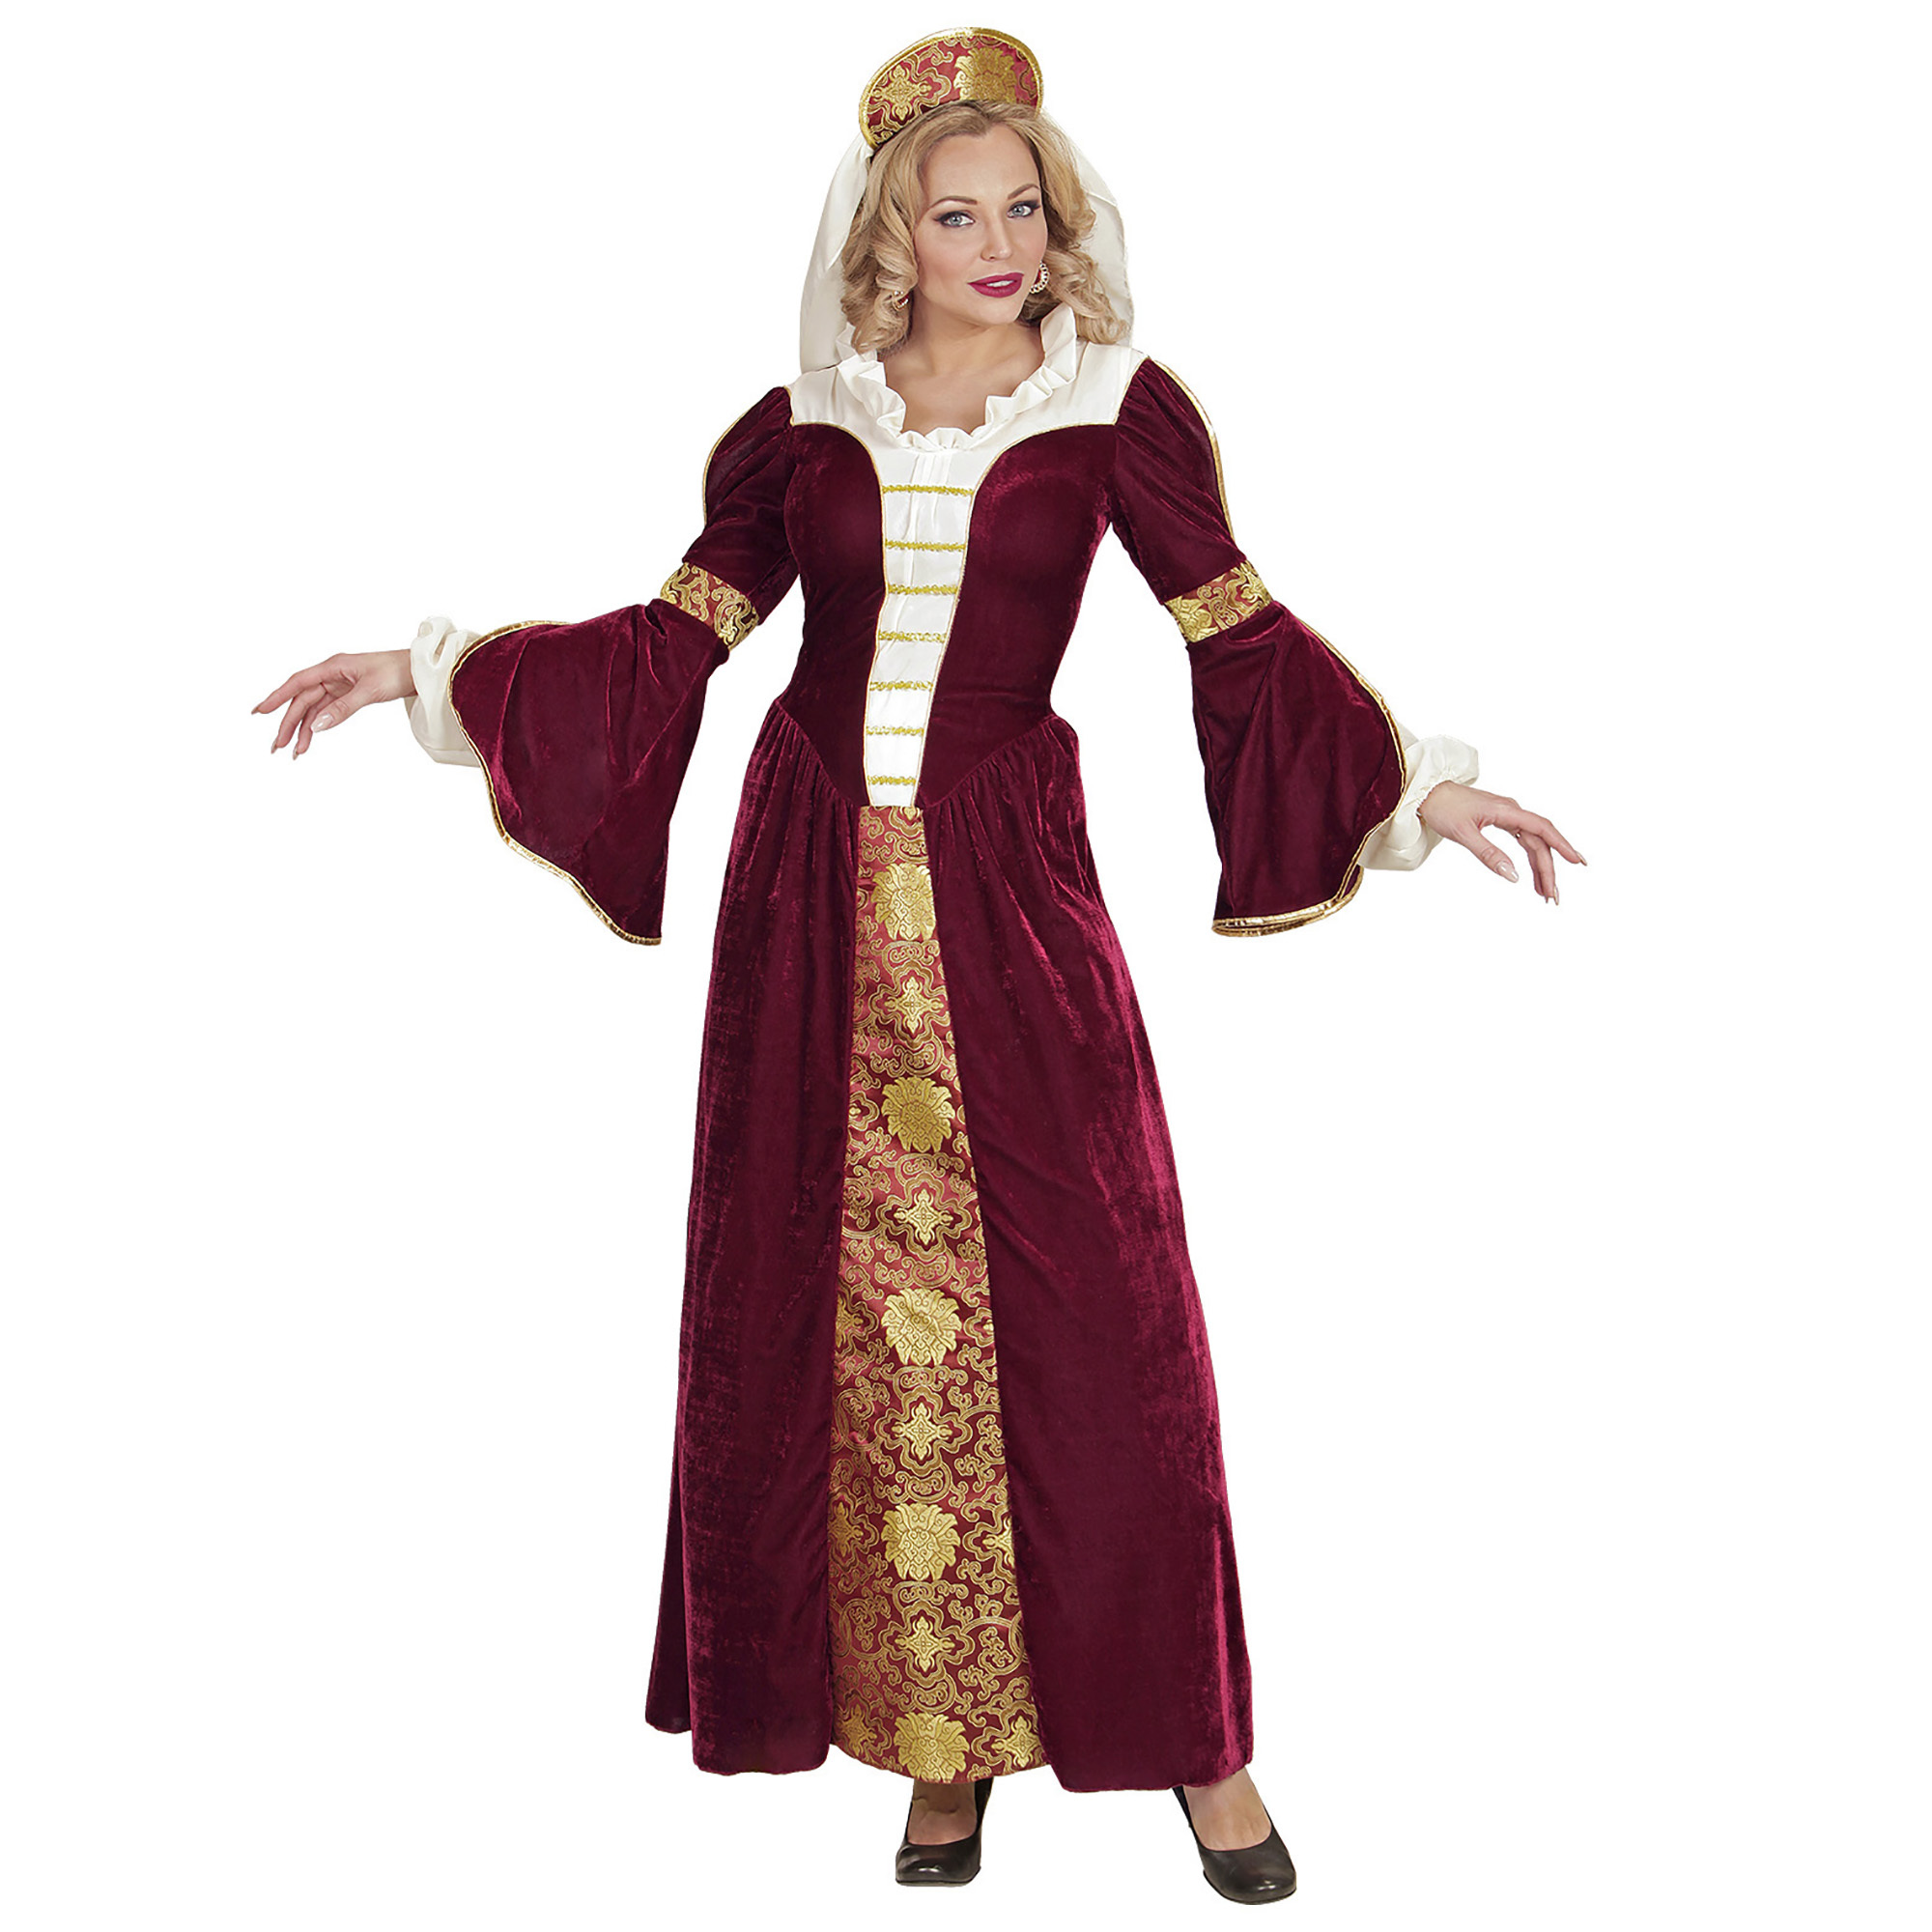 Middeleeuwse koningin kostuum Alice